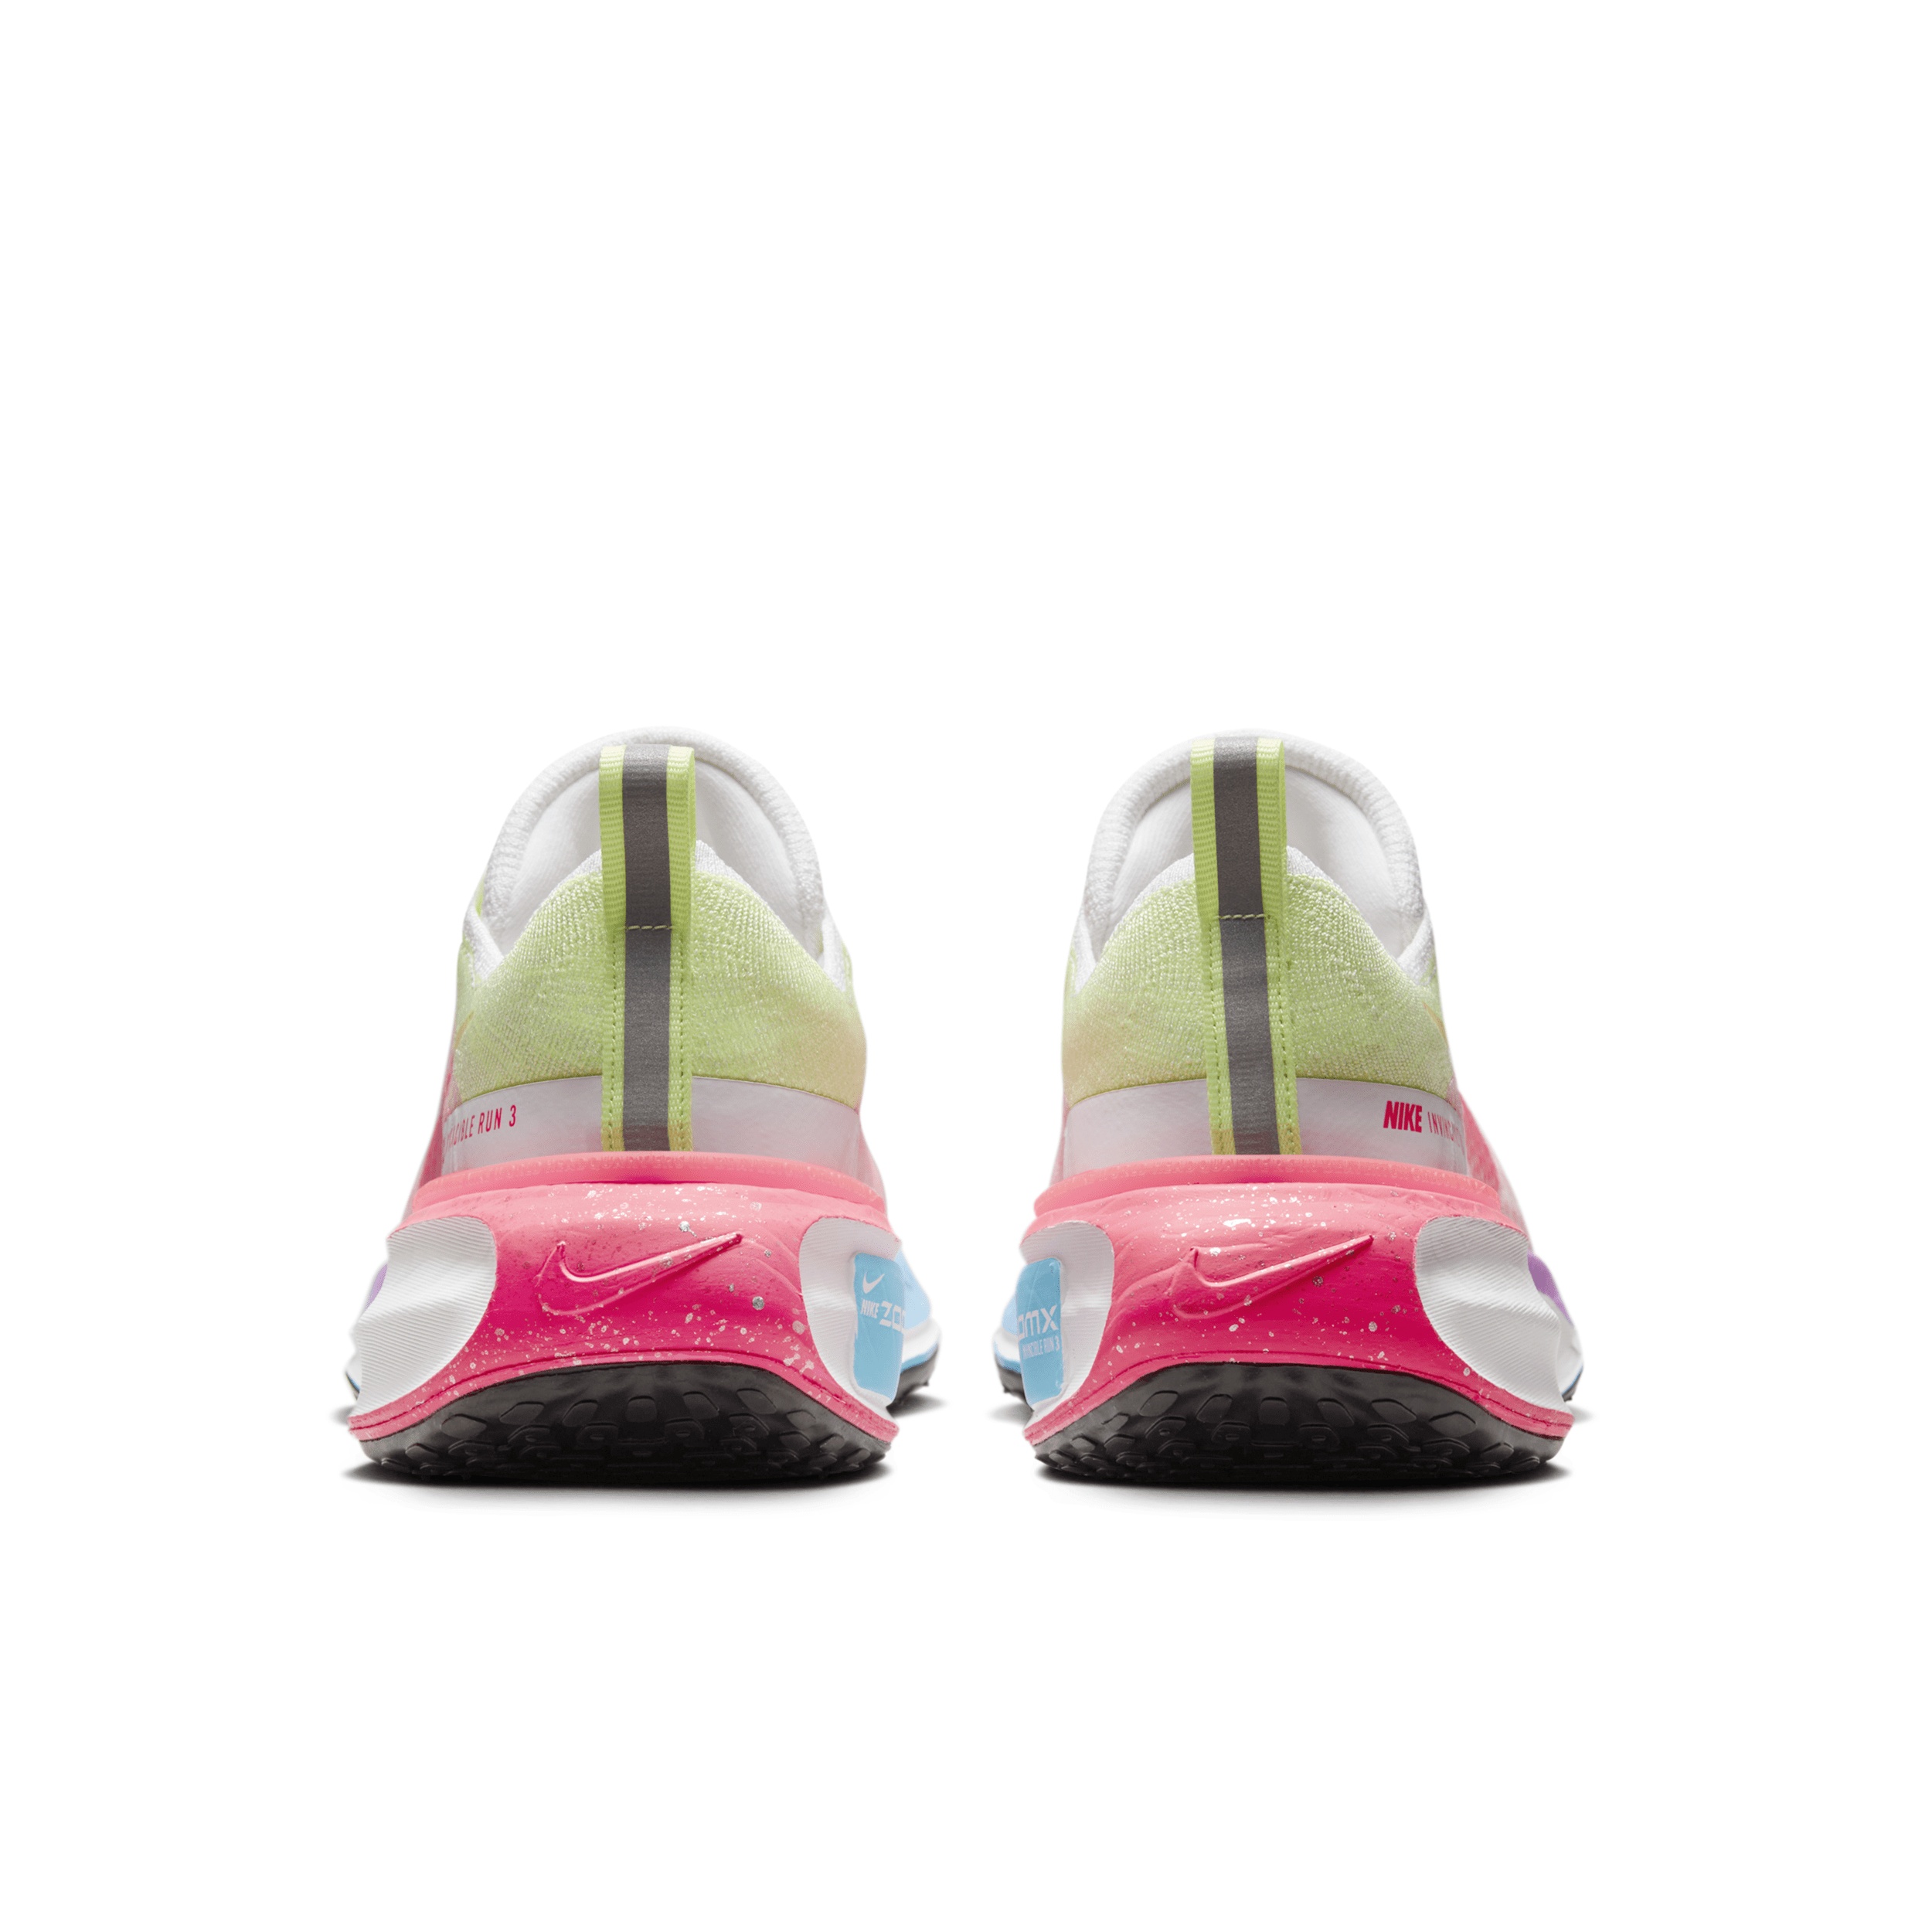 Nike Women's Invincible 3 Road Running Shoes - 6